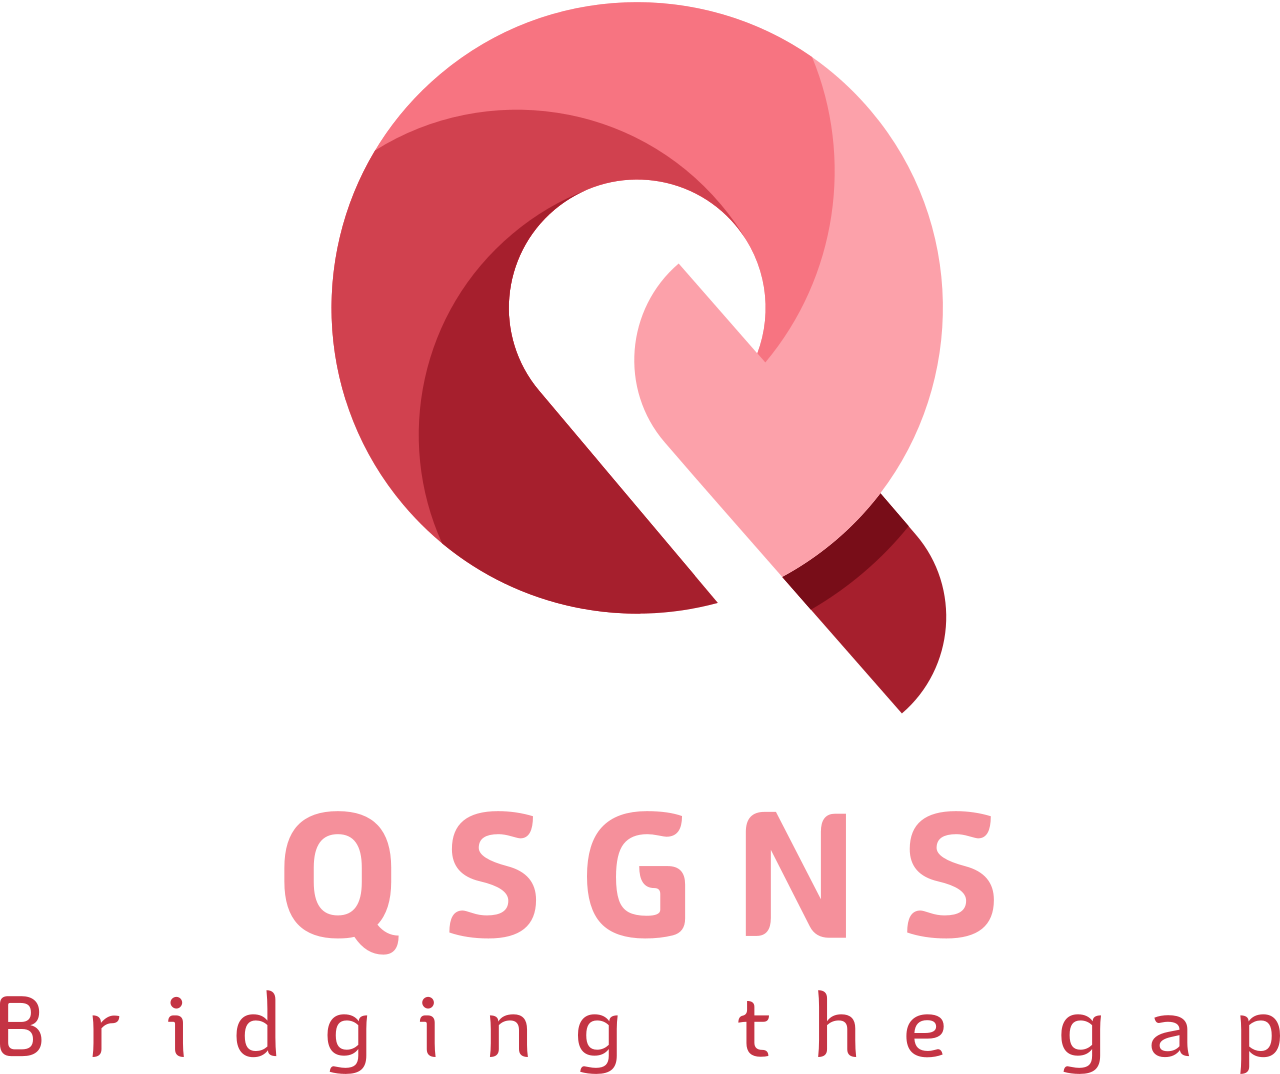 QSGNS's logo